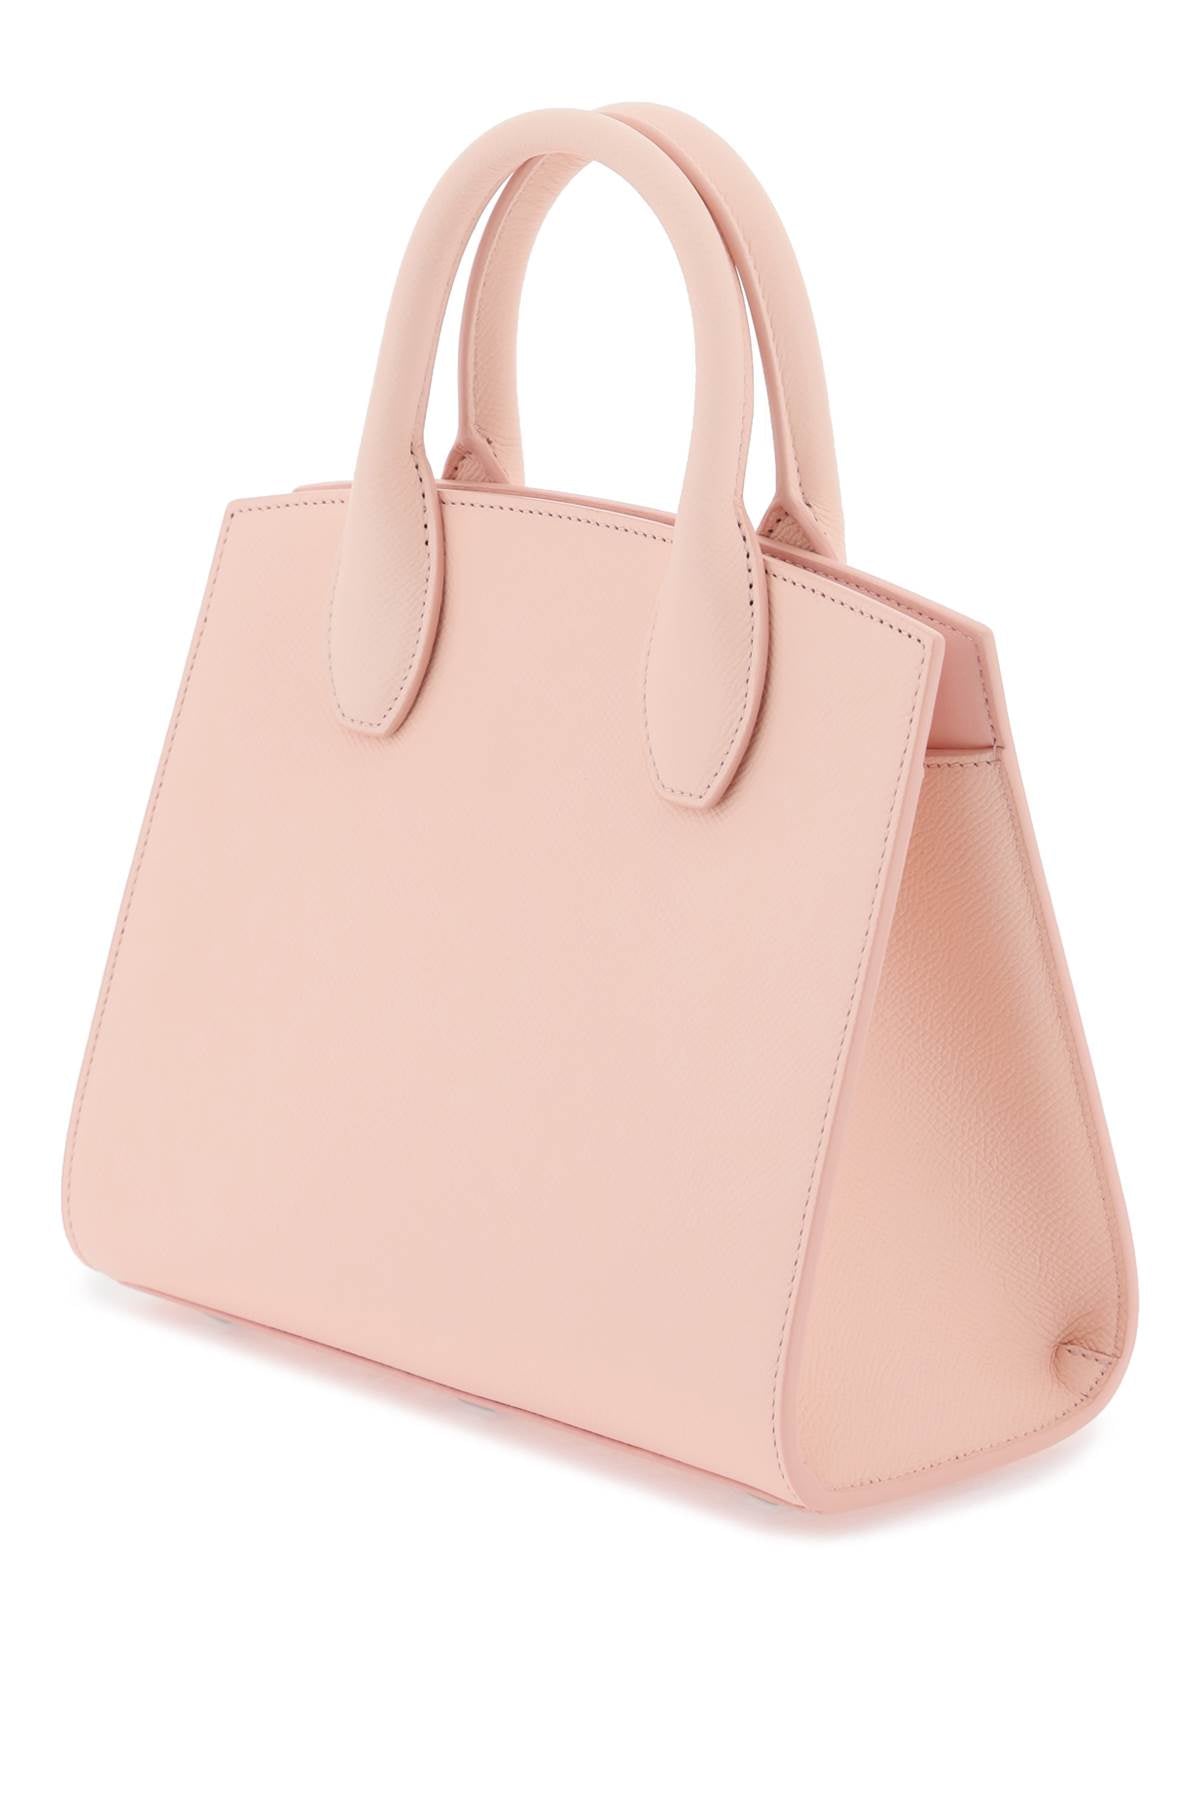 FERRAGAMO Pink Studio Box Handbag in Hammered Leather with Gancini Hook Motif